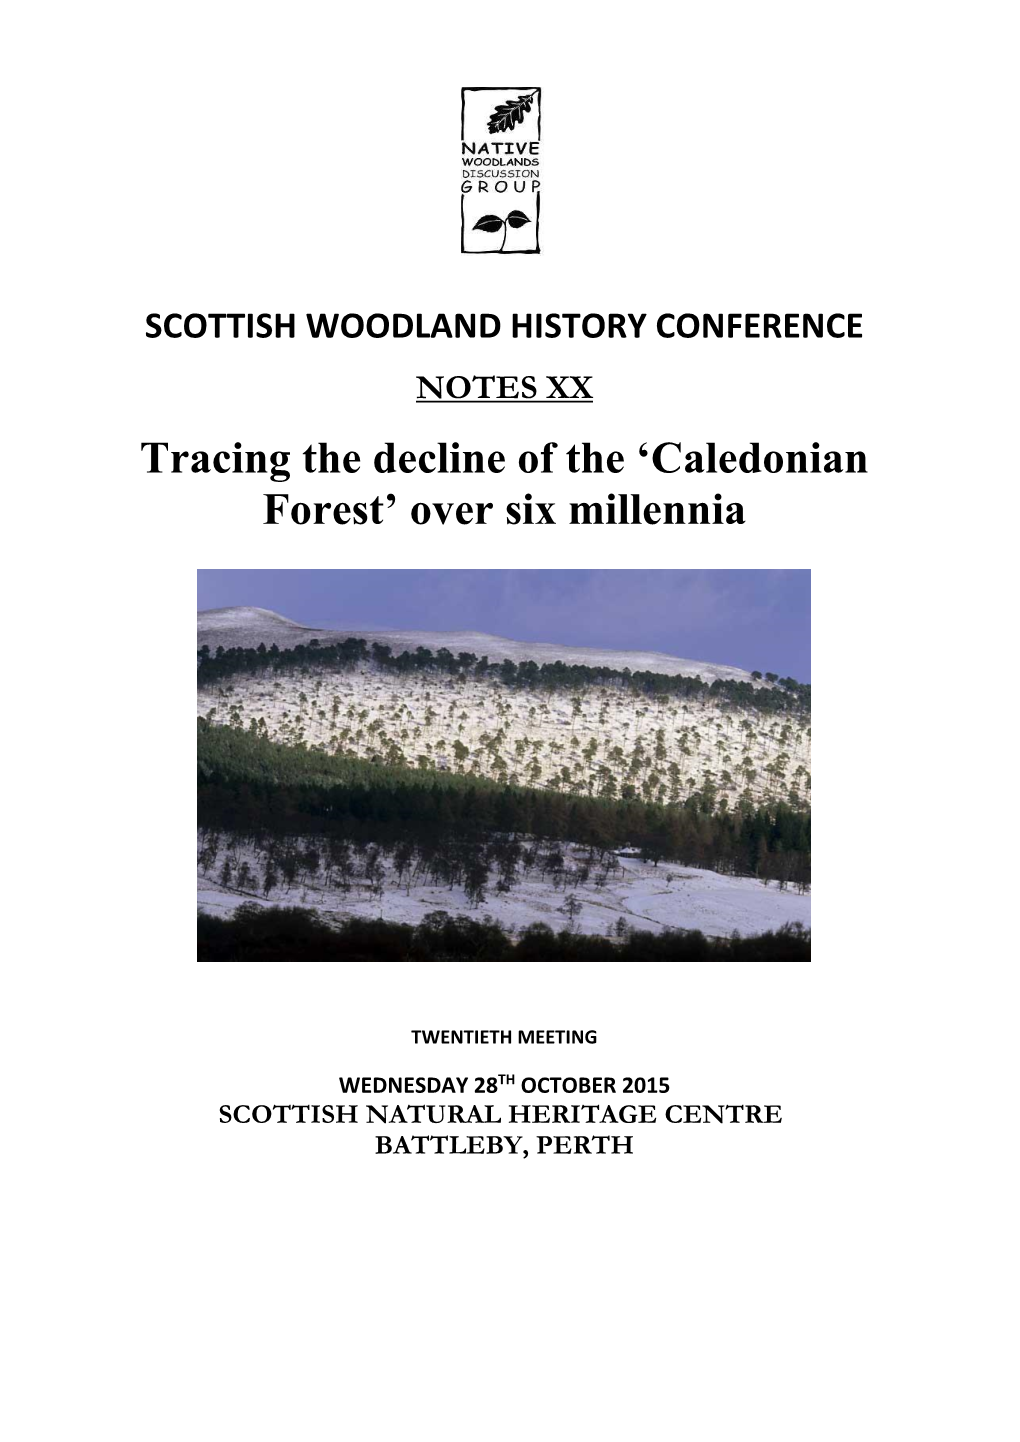 Caledonian Forest’ Over Six Millennia